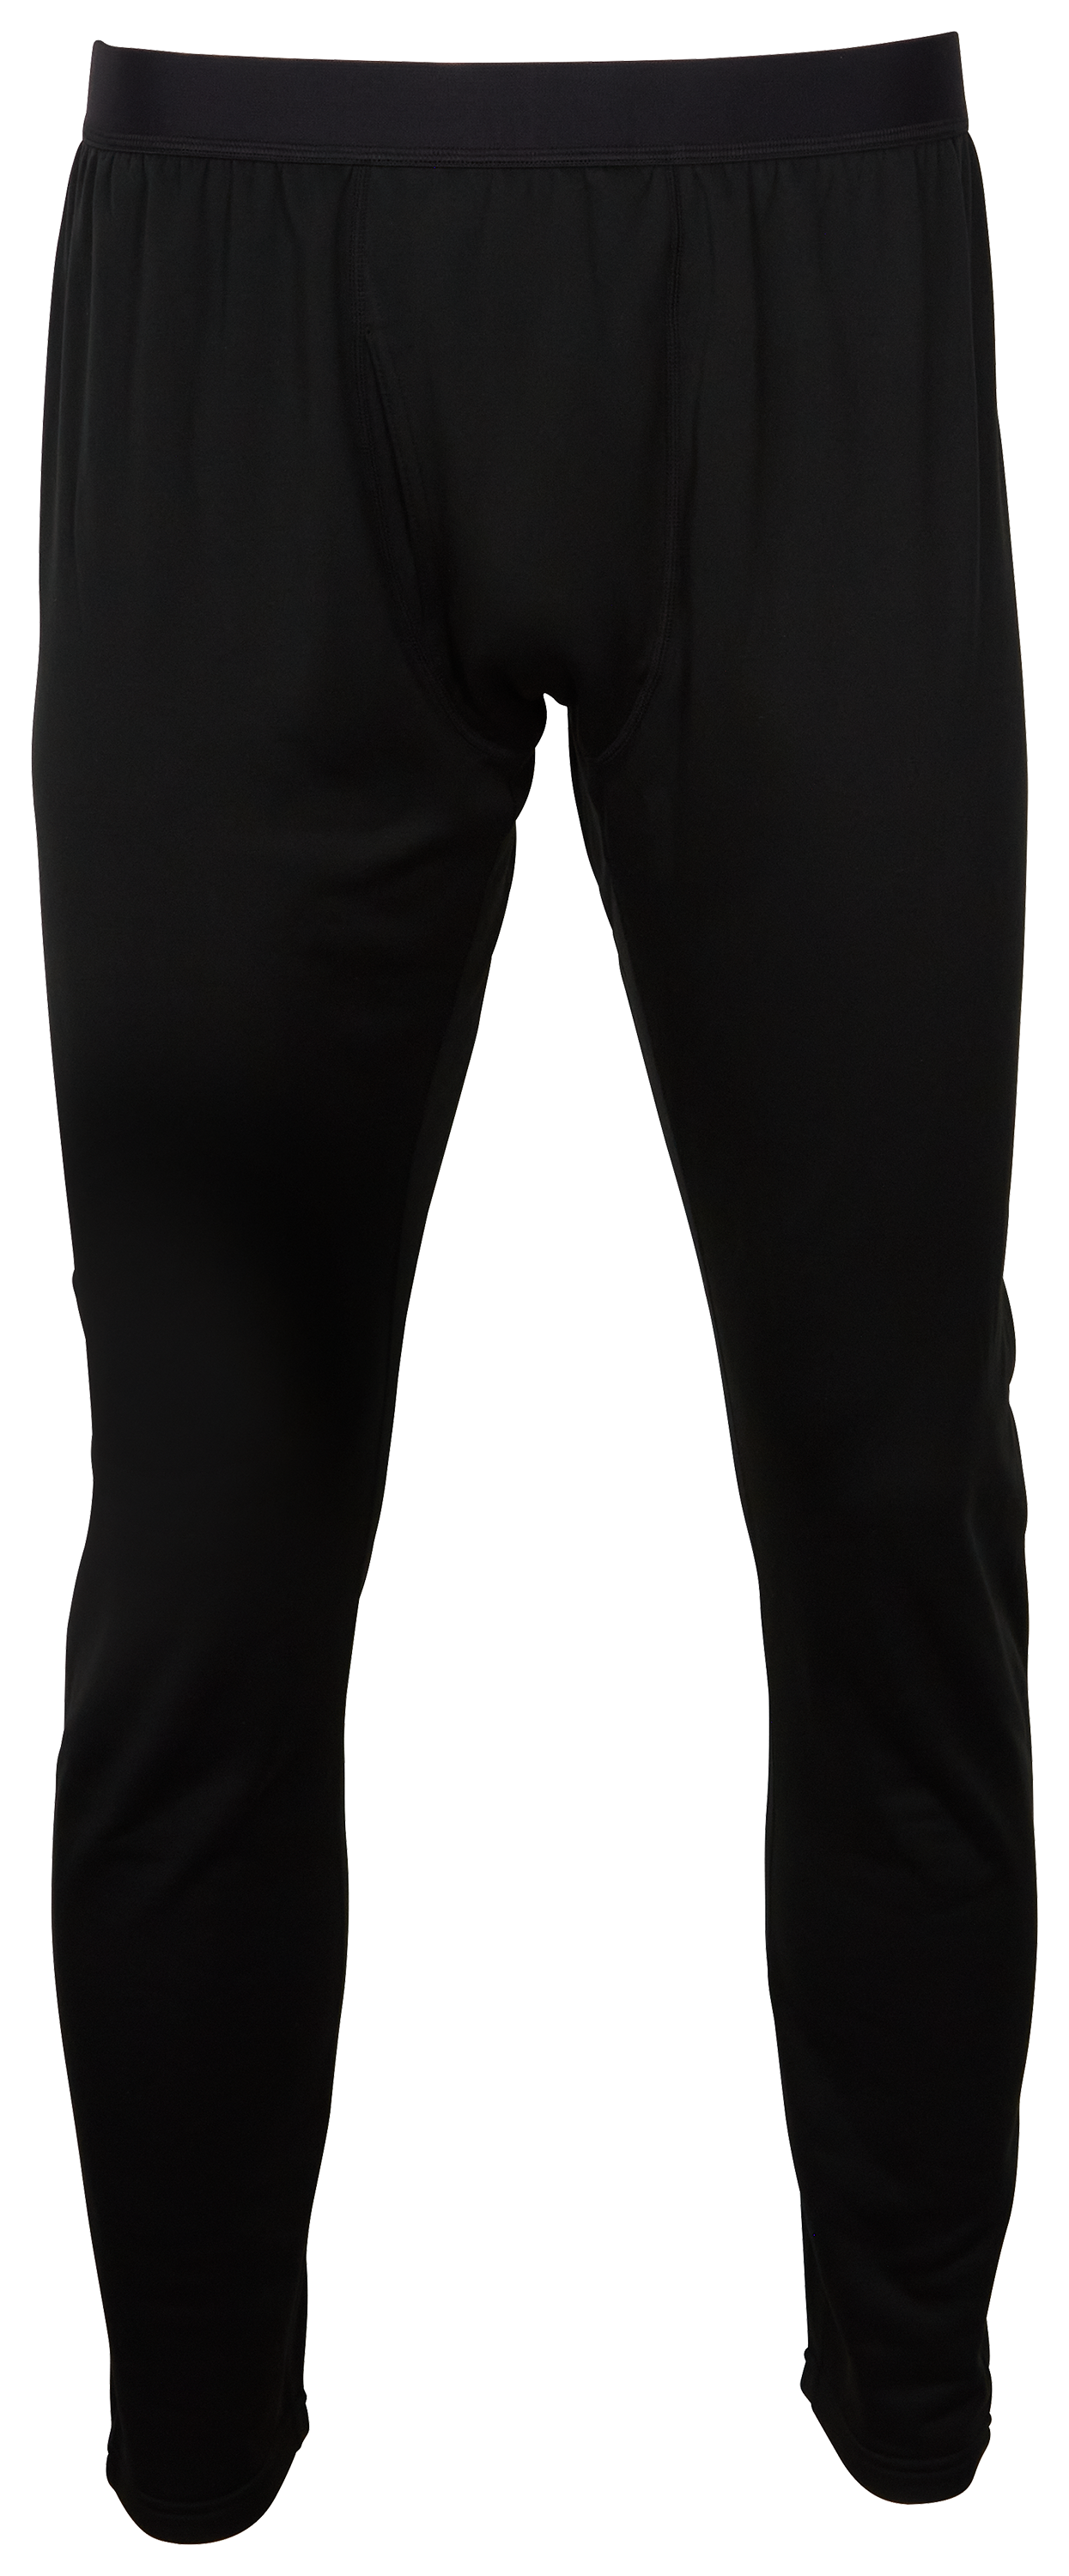 Bass Pro Shops Thermal Fleece Base-Layer Pants for Men